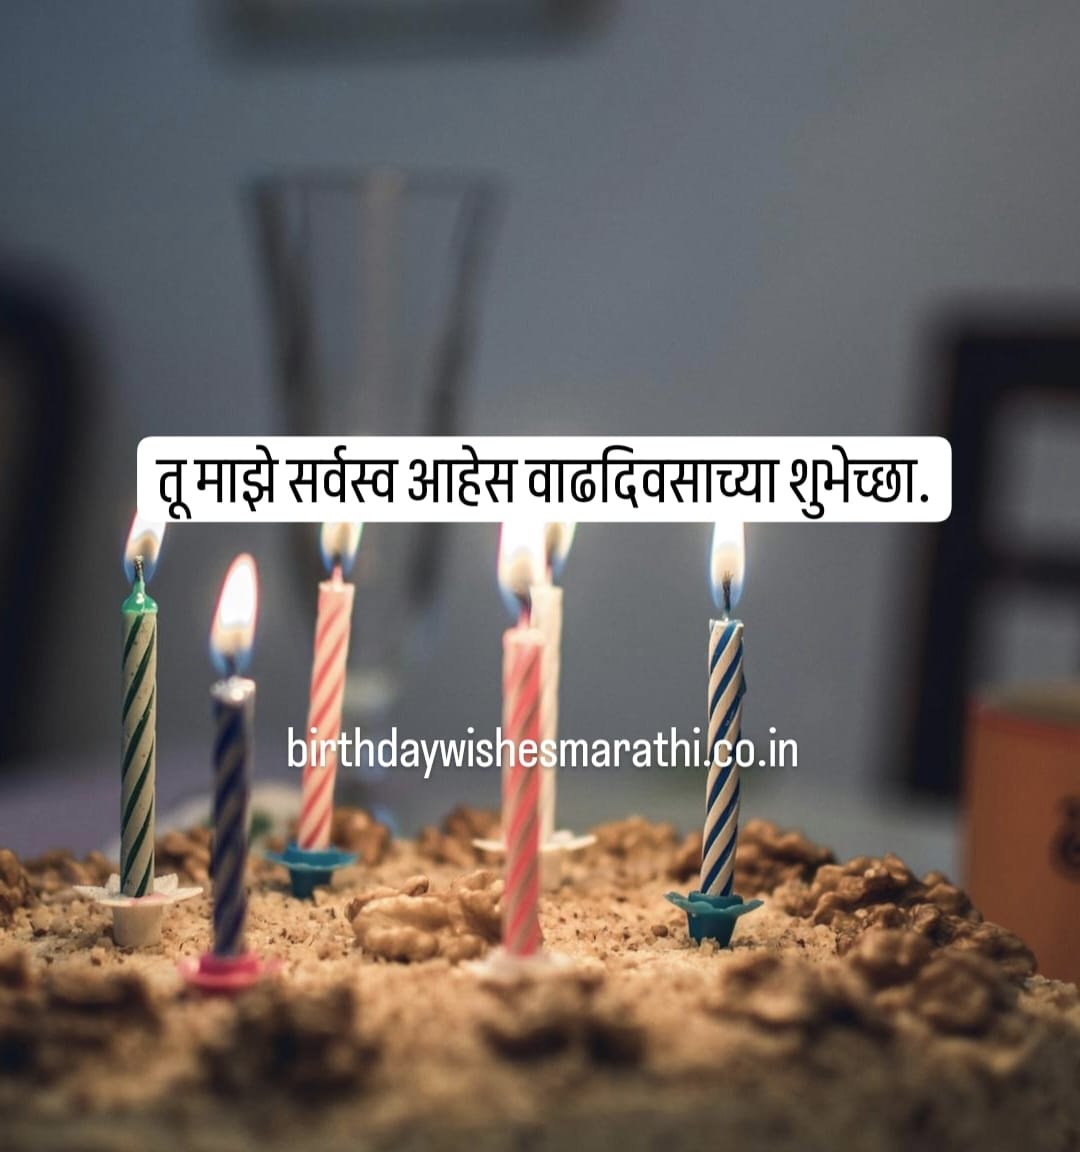 Birthday Wishes for Husaband Marathi